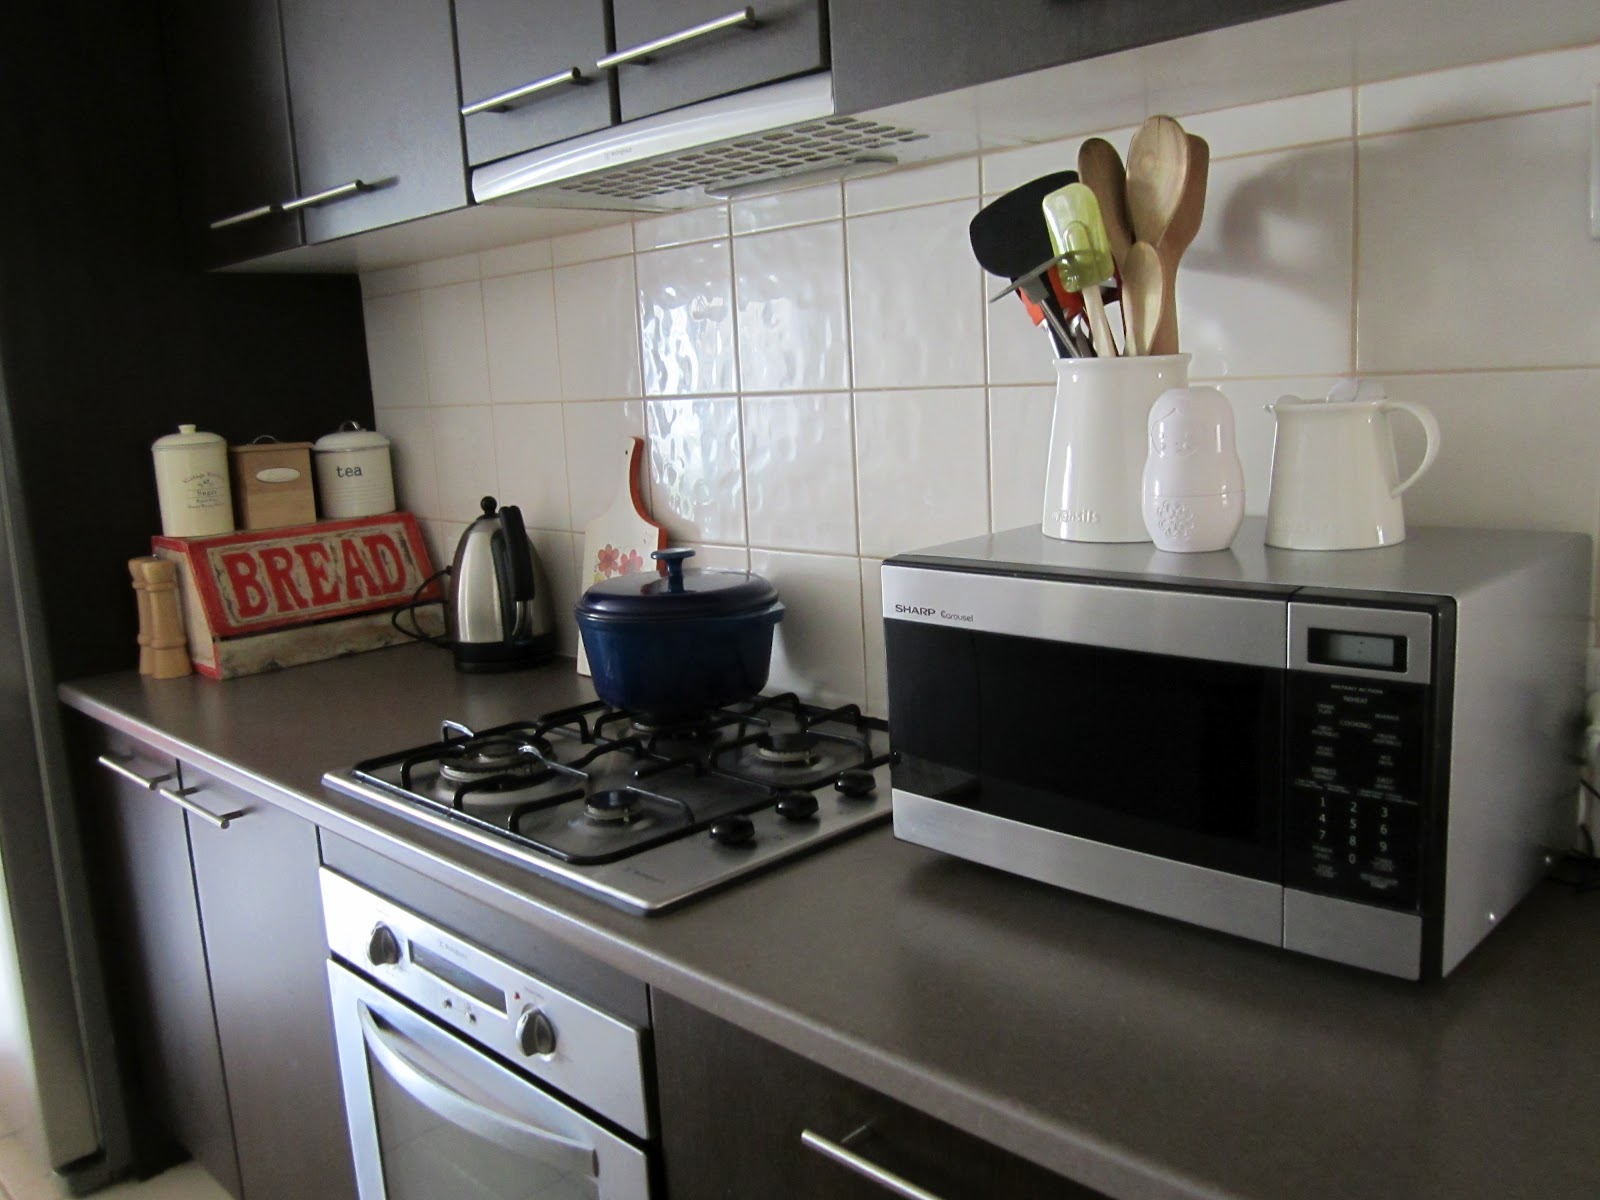 https://www.appliancesonline.com.au/academy/wp-content/uploads/2013/03/organised-kitchen.jpg